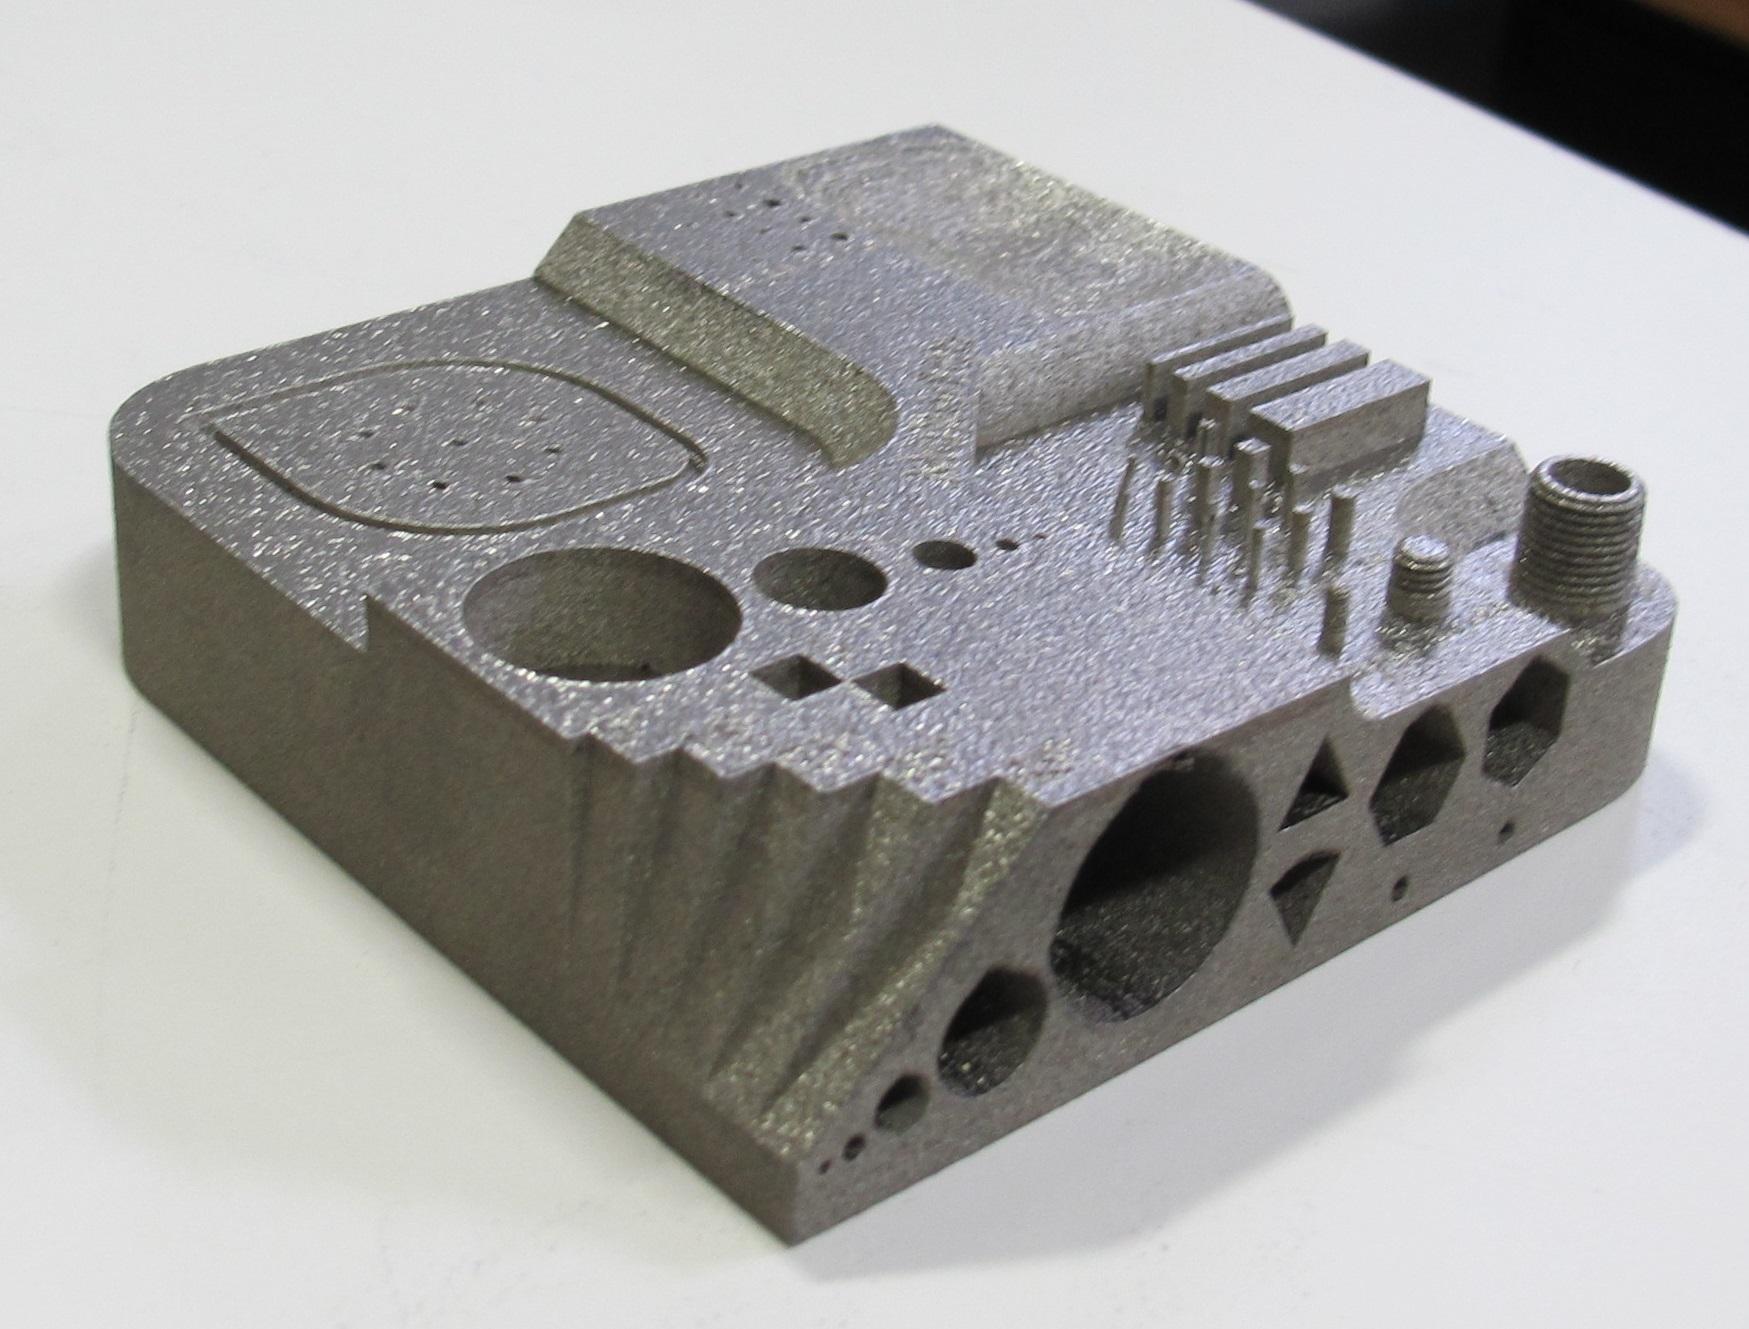 MatterFab Reveals Their Affordable Metal 3D Printer, ‘An Order of